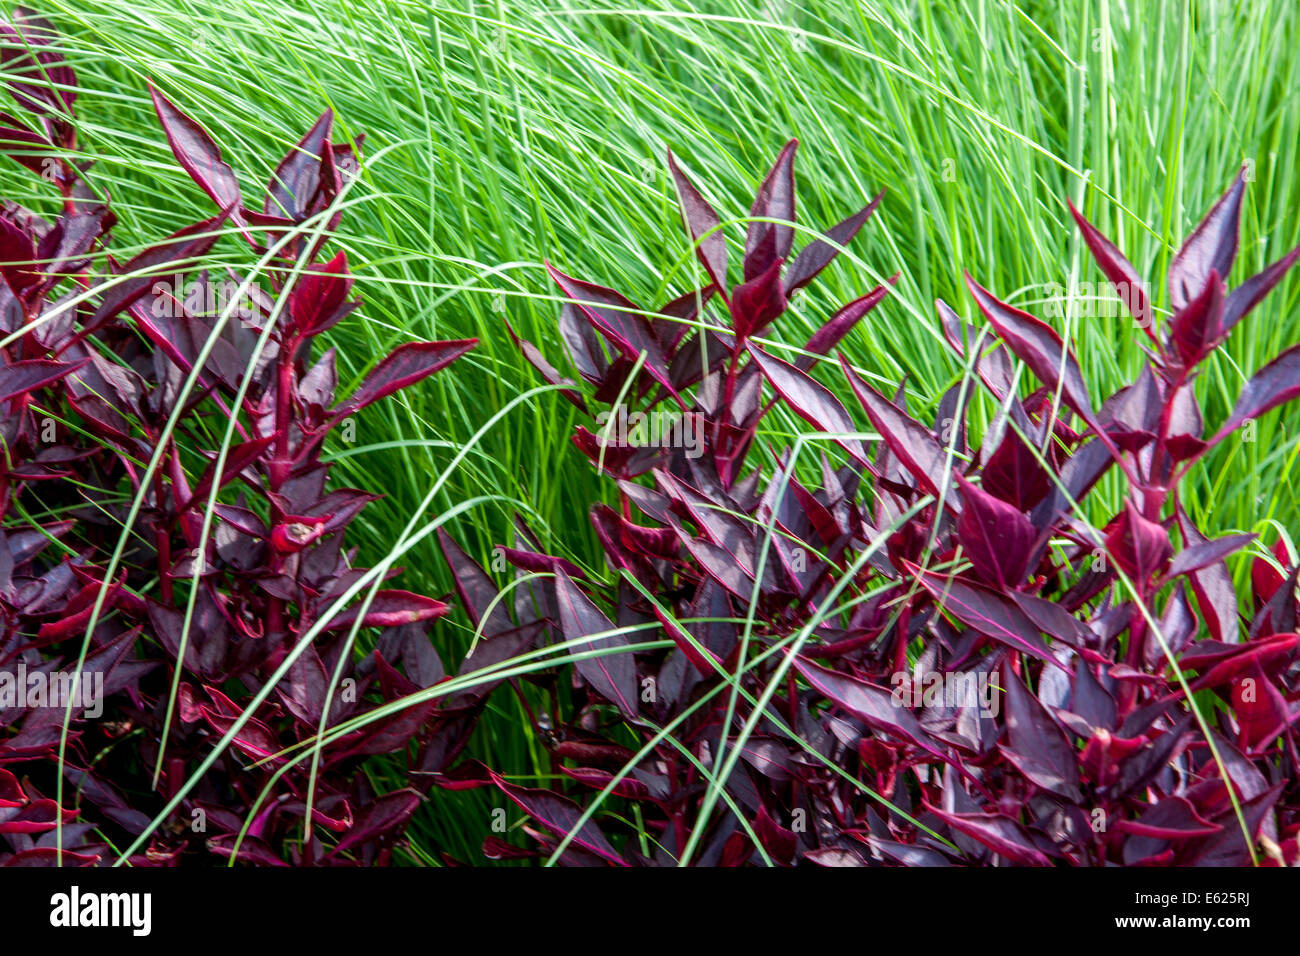 Bloodleaf, Iresine ornamental grass, contrast colors Stock Photo